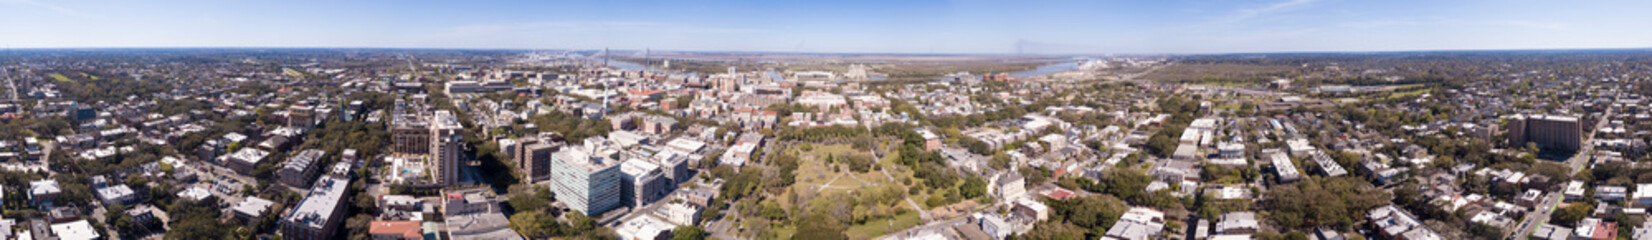 Aerial 360 degree seamless panorama of downtown Savannah, Georgia, USA